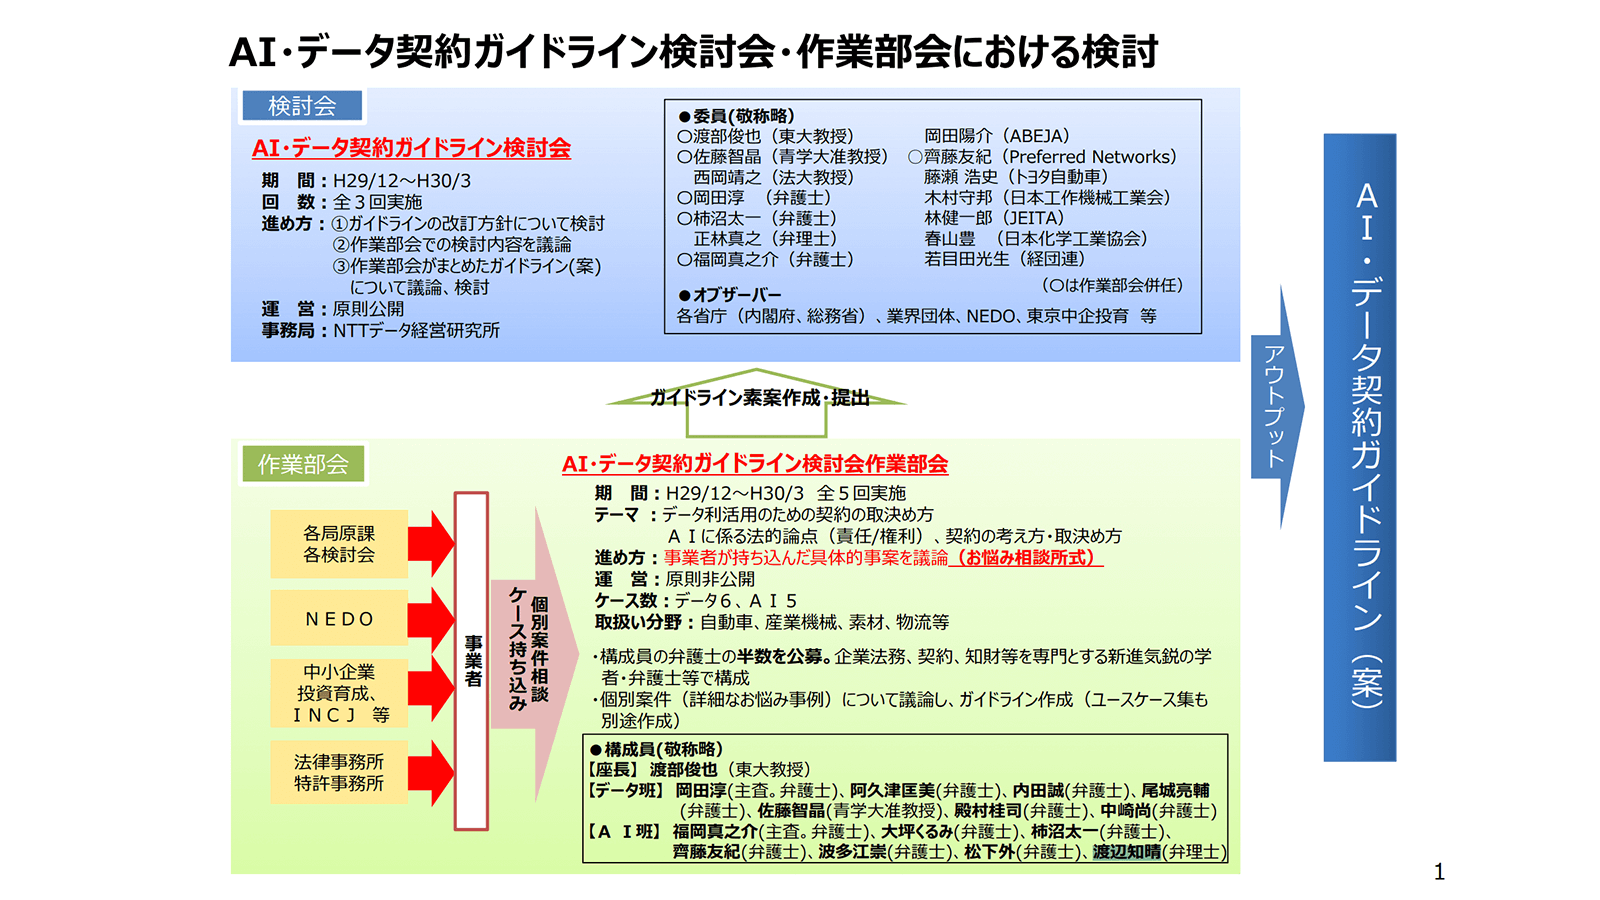 https://www.meti.go.jp/press/2018/06/20180615001/20180615001-4.pdf 2020年3月16日最終アクセス